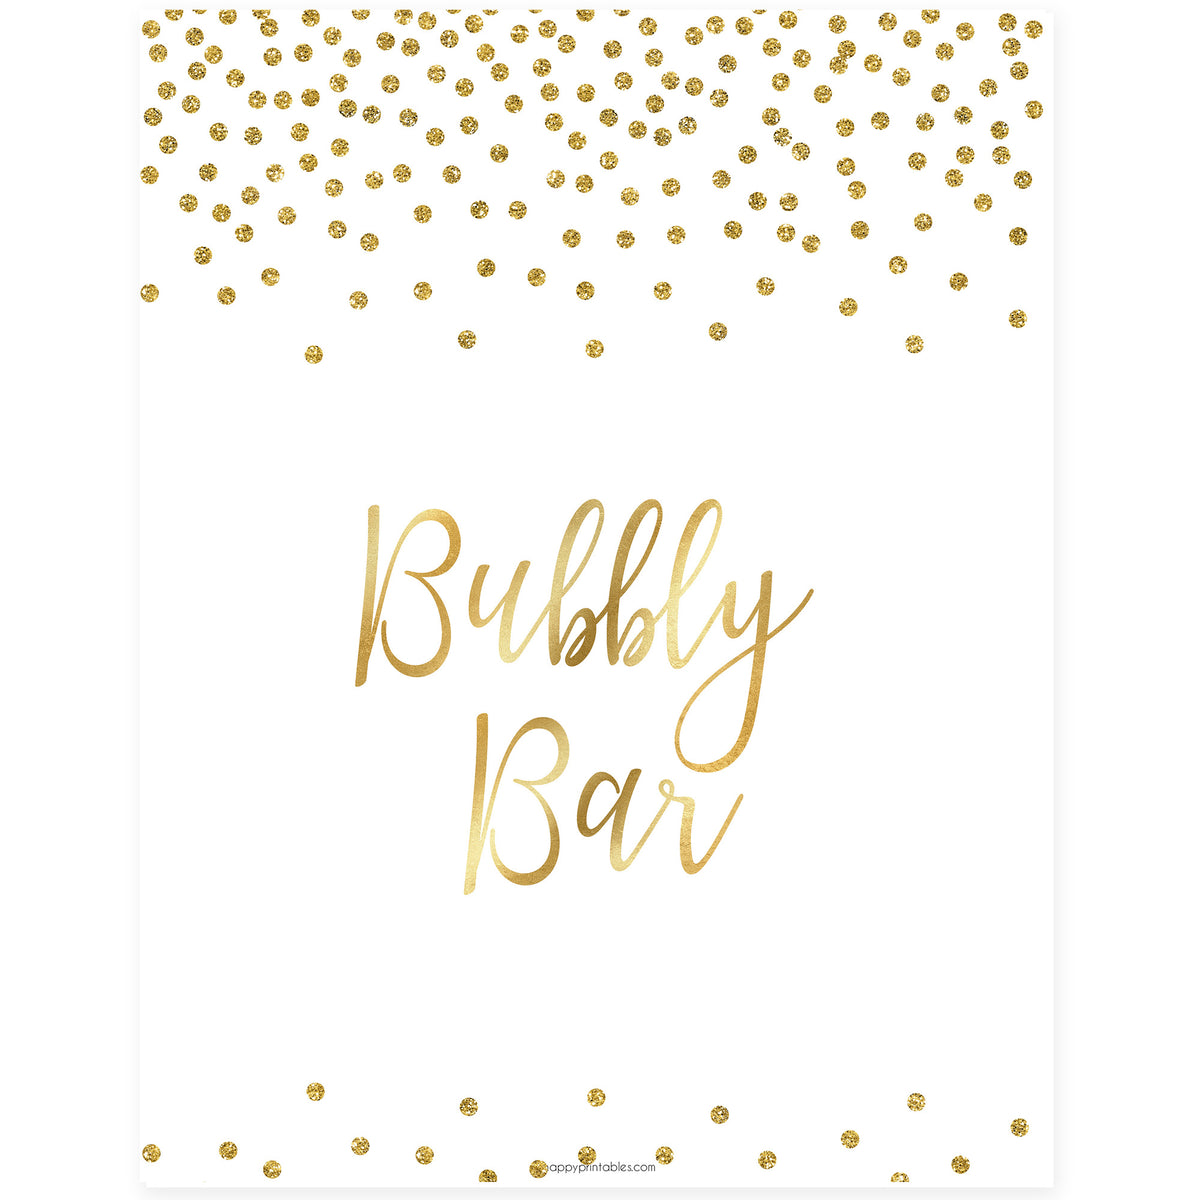 Bubbly Bar Sign - Gold Foil